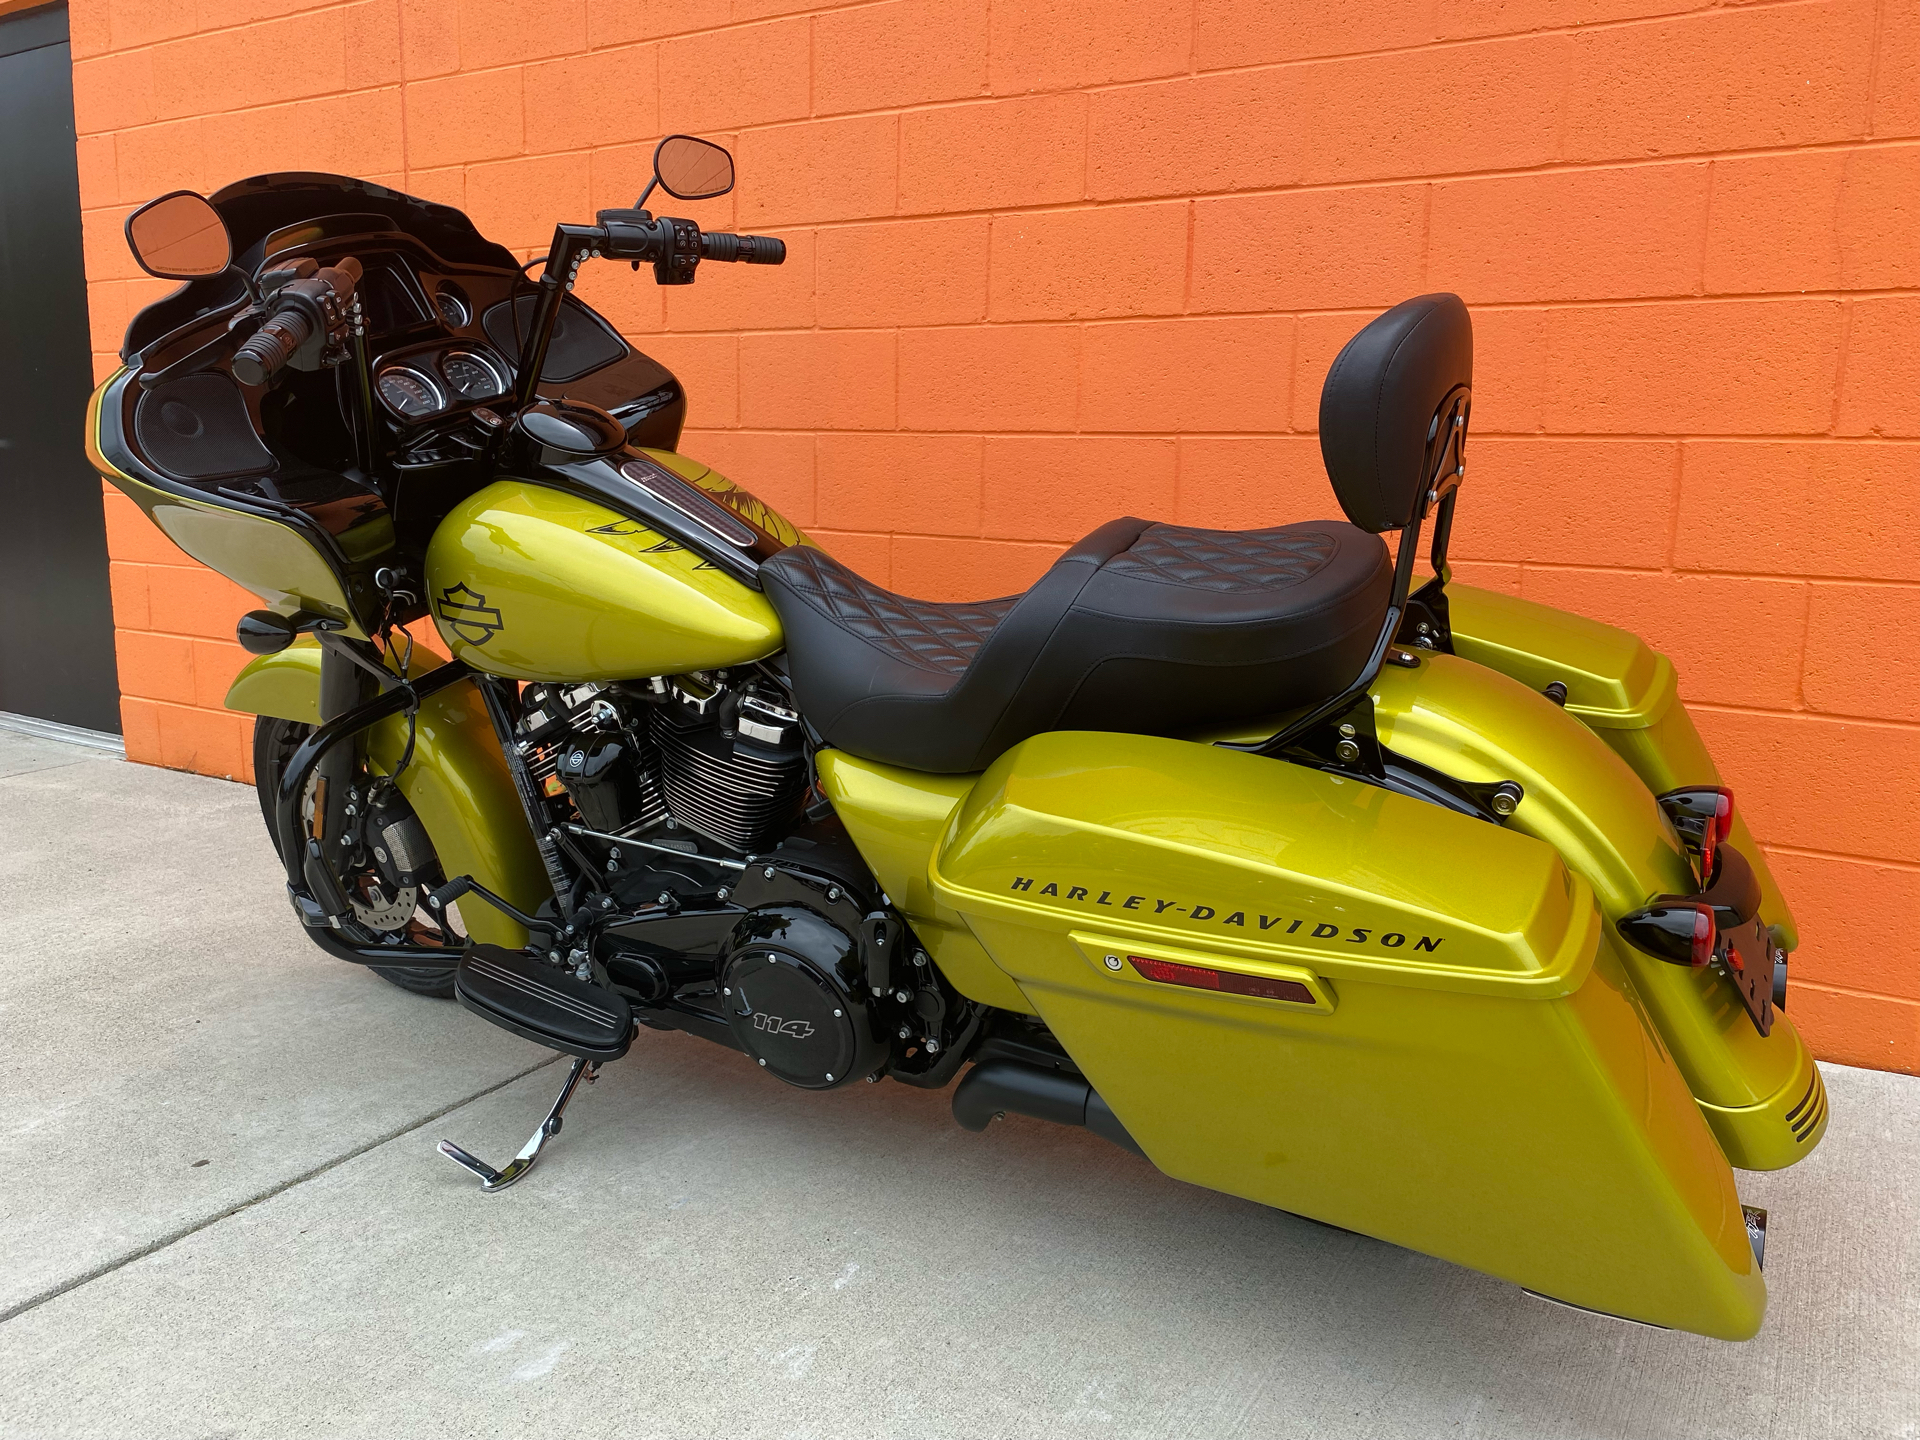 2020 Harley-Davidson Road Glide® Special in Fredericksburg, Virginia - Photo 6